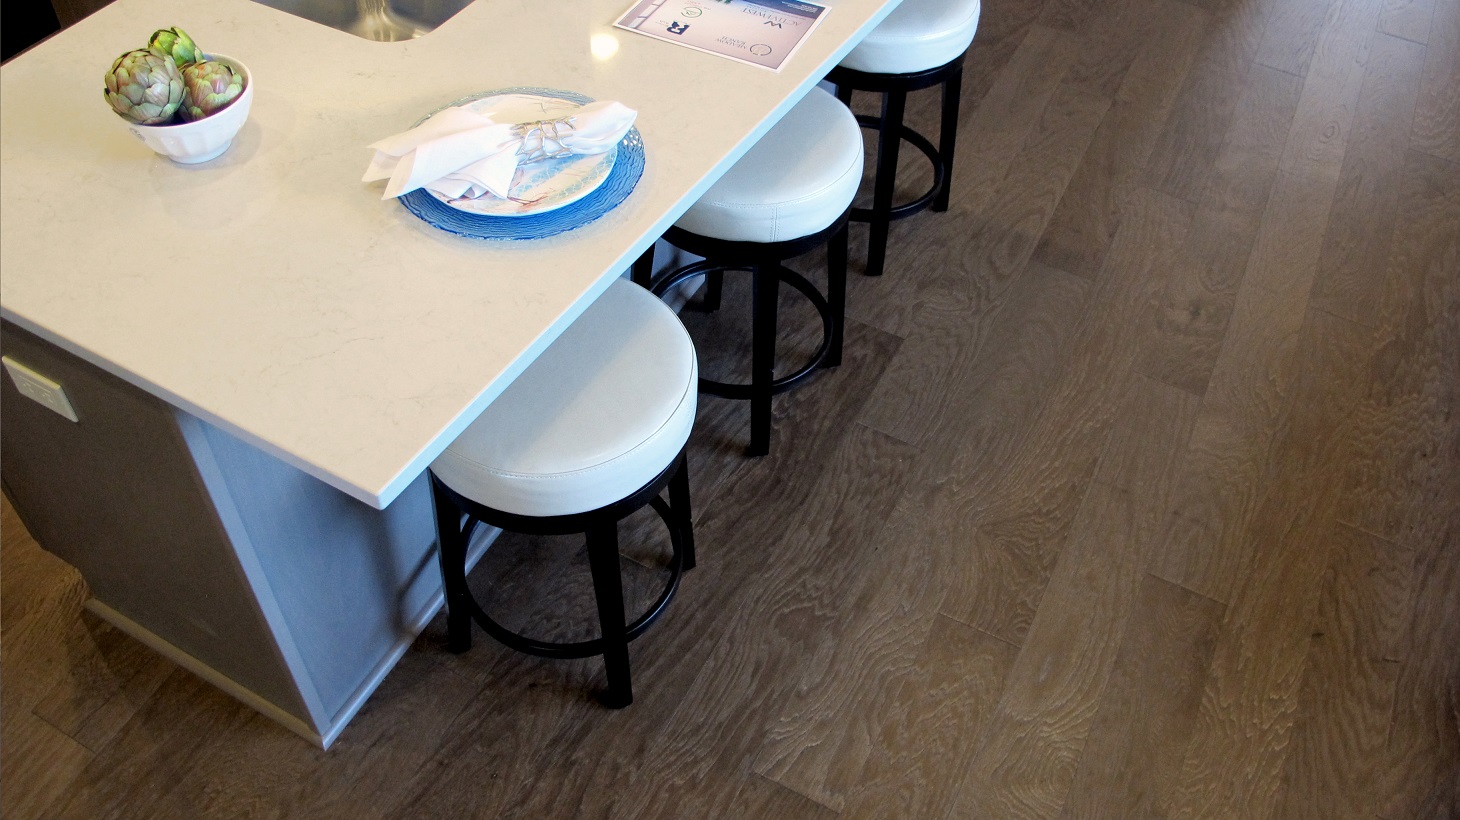 Urban loft shaw hardwood floor Long Island color engineered matte finish modern stylish island bar stools quartz counter tops white light bright interior design loft townhouse 